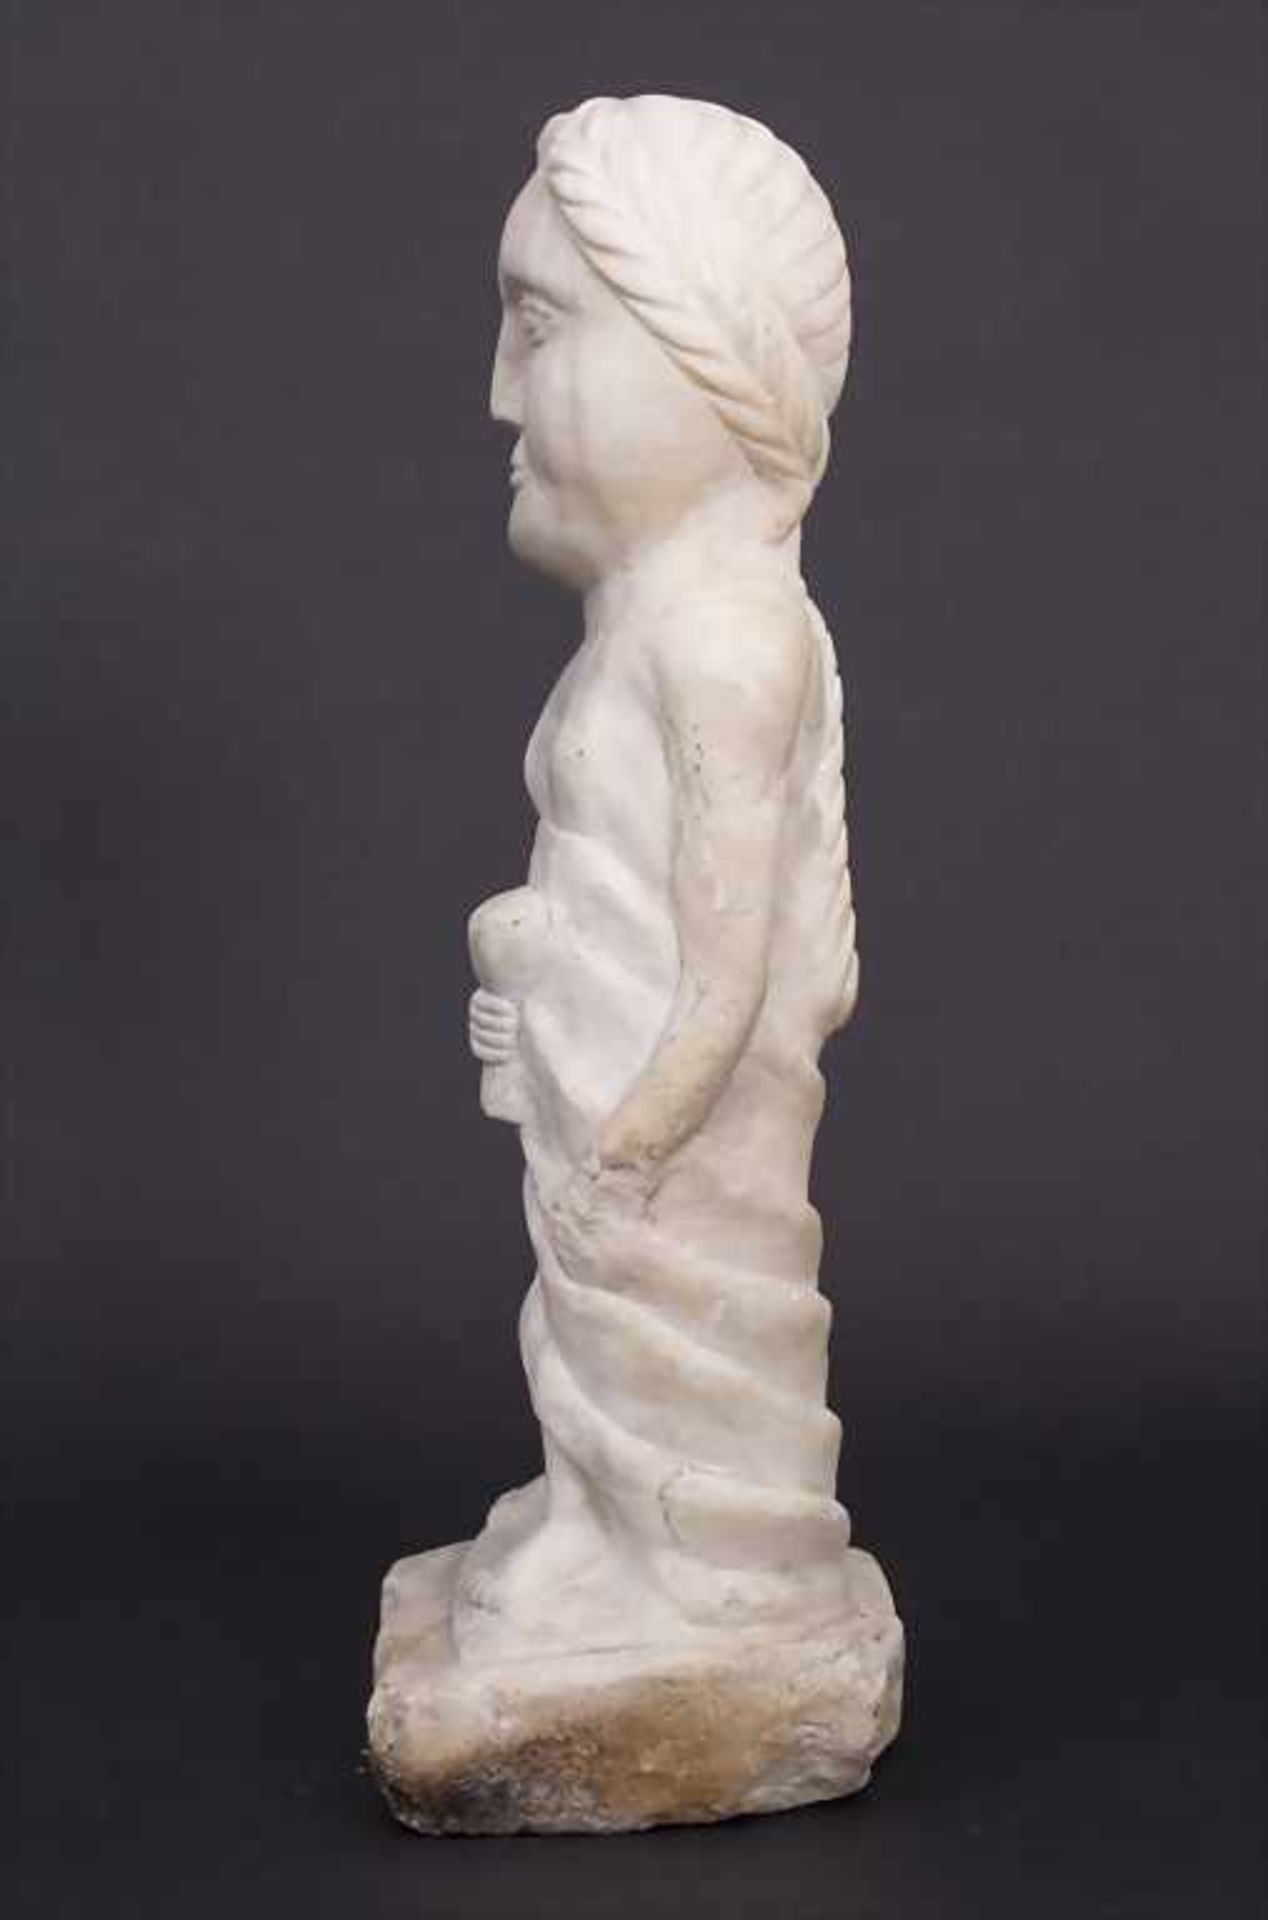 Marmorstatue 'Bacchantin' Frankreich, 16./17. Jh.Material: Heller Marmor, grau geädert,Höhe: 48 cm, - Image 2 of 4